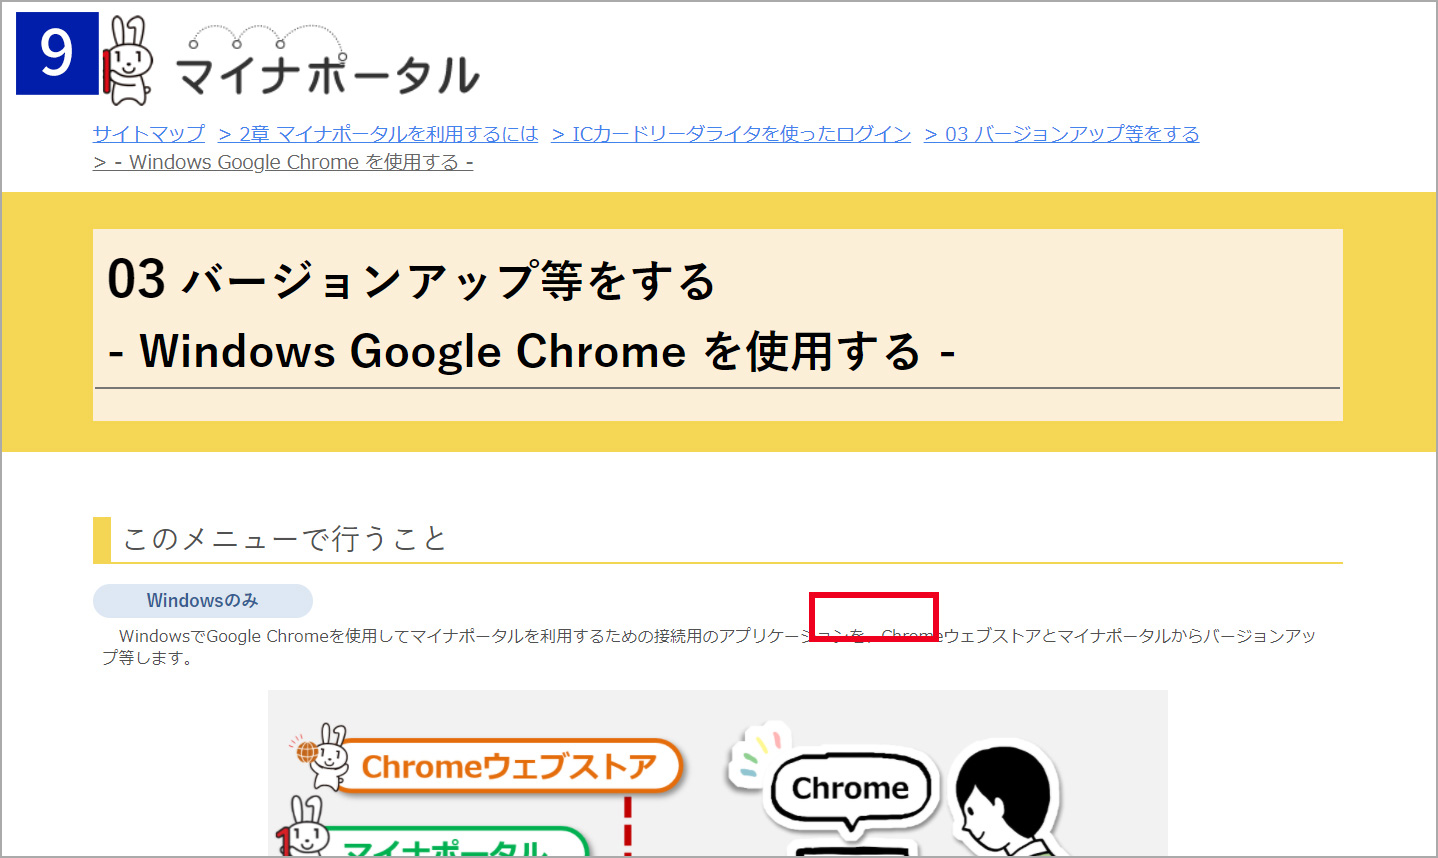 Google Chromeの機能拡張とアプリケーションのバージョンアップについての詳細